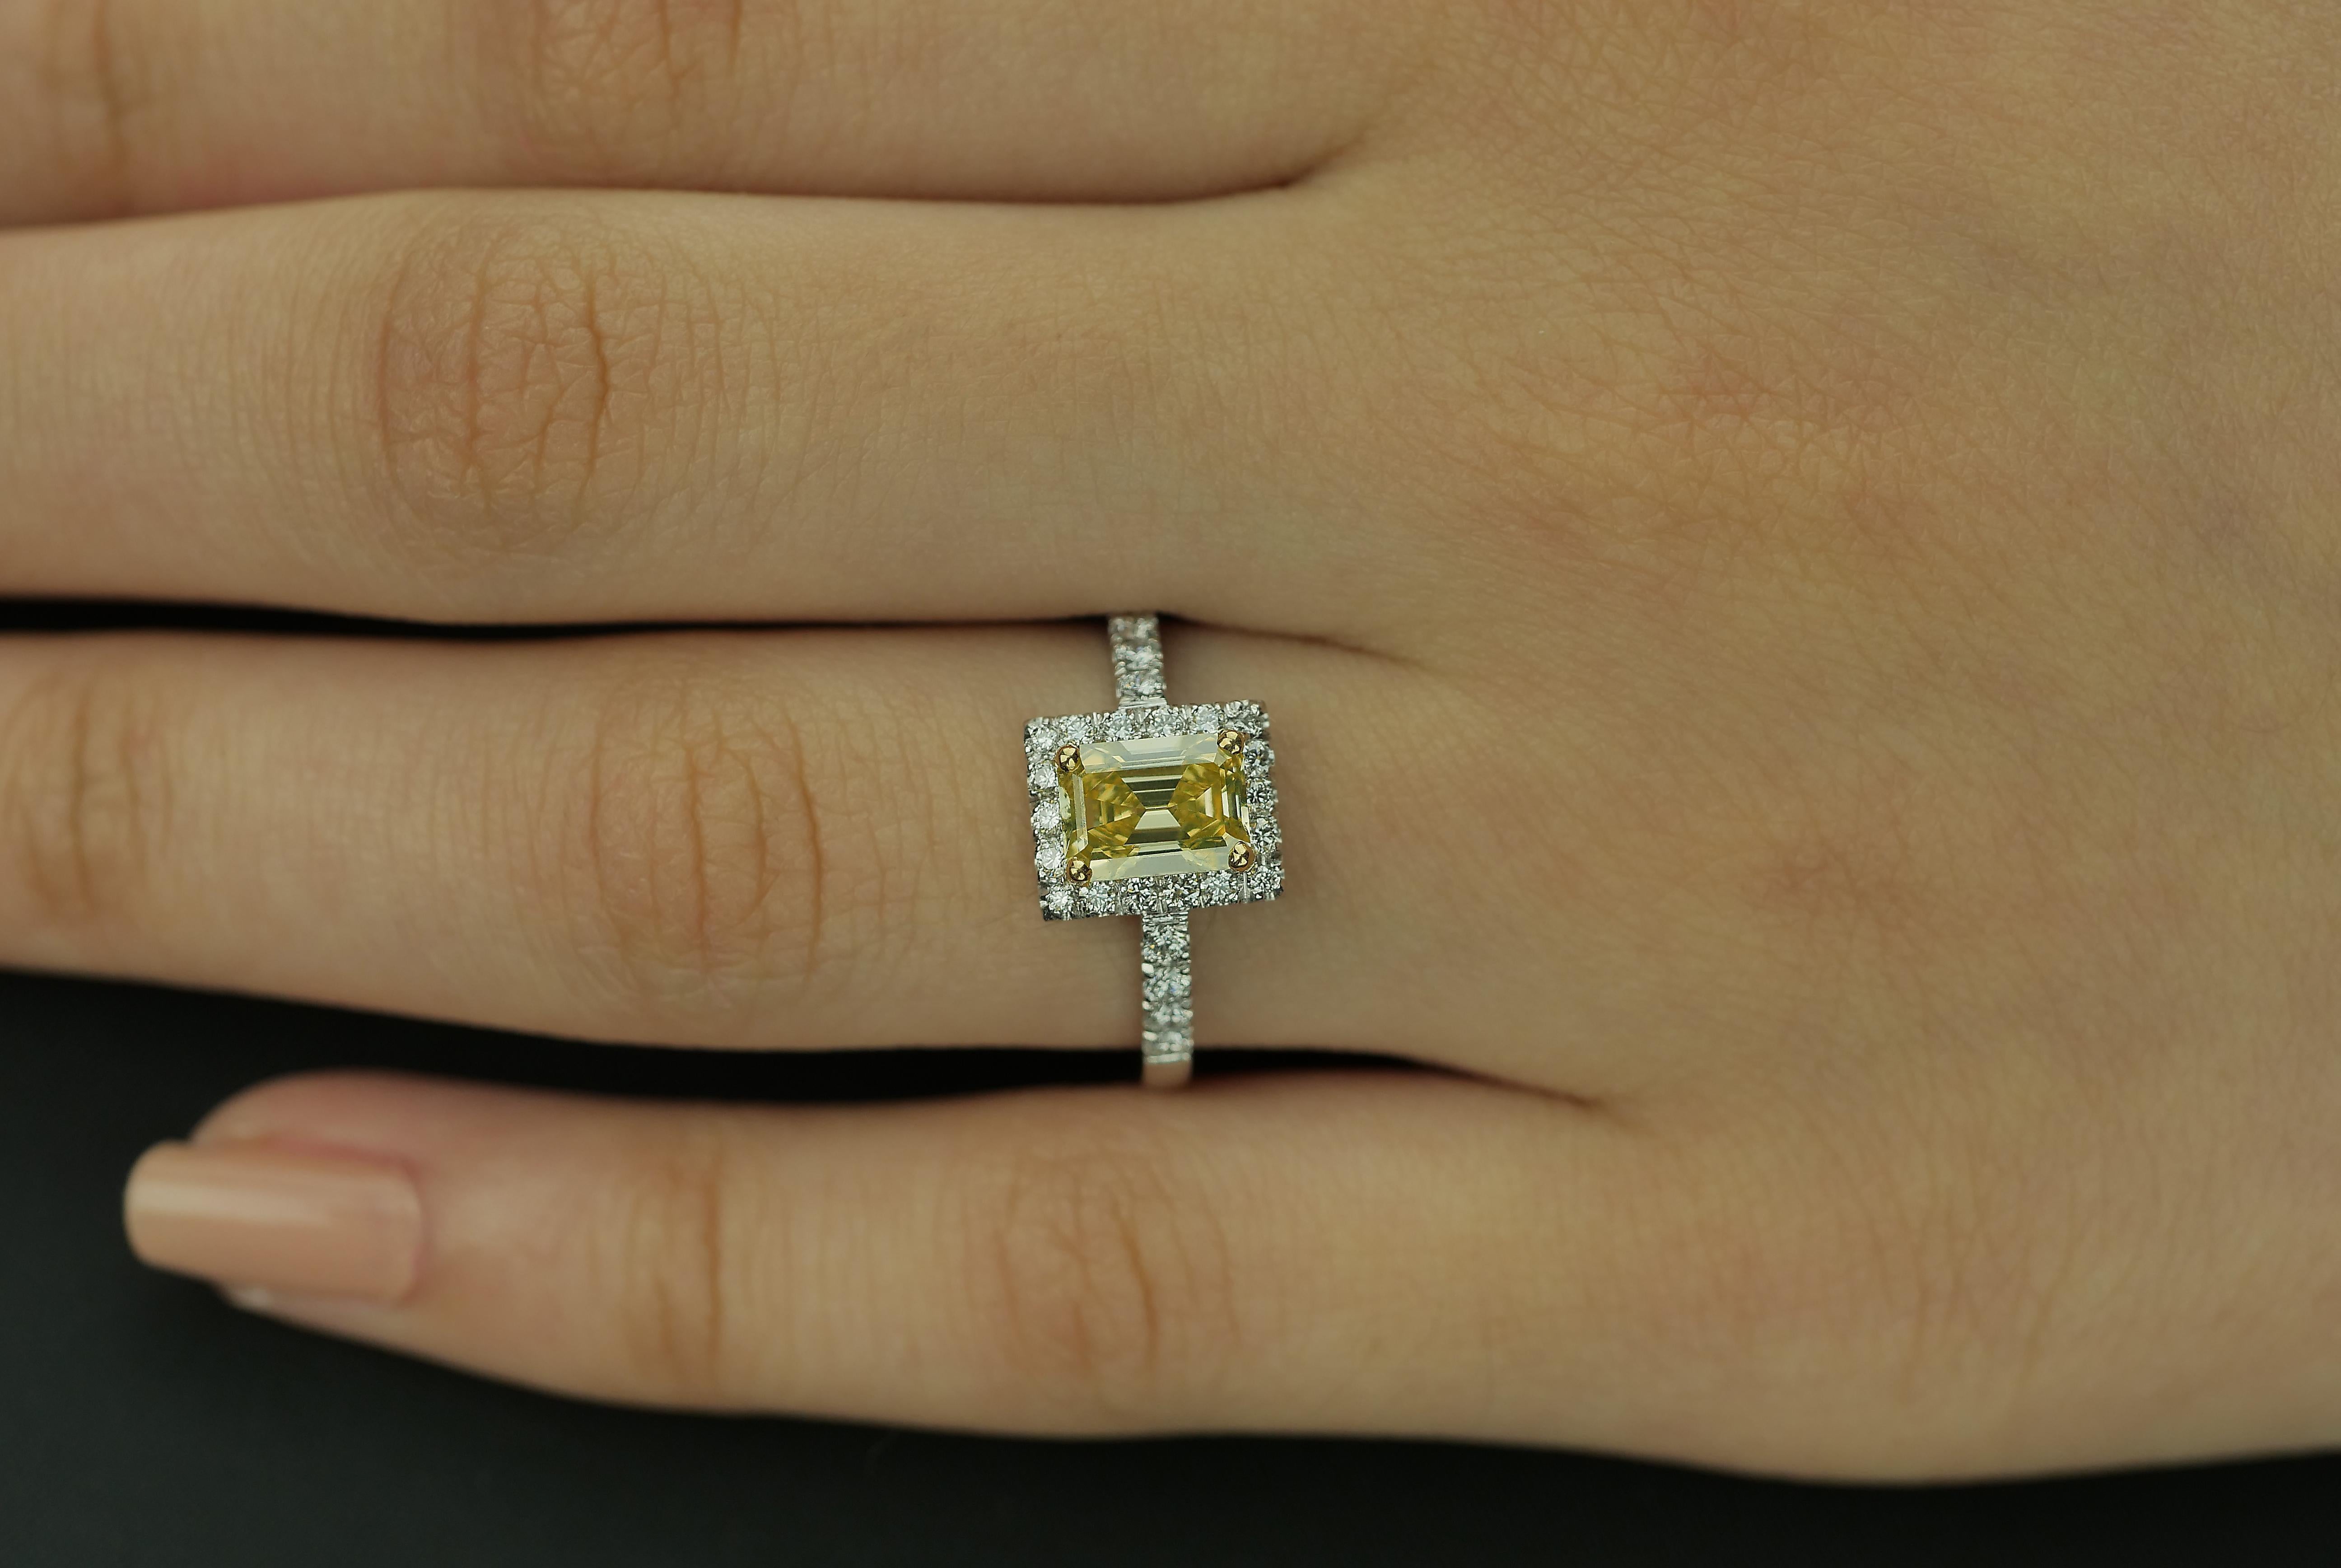 GCS Certified 1.05 ct Fancy Intense Yellow Diamond, Emerald Cut Ring in Platinum 1